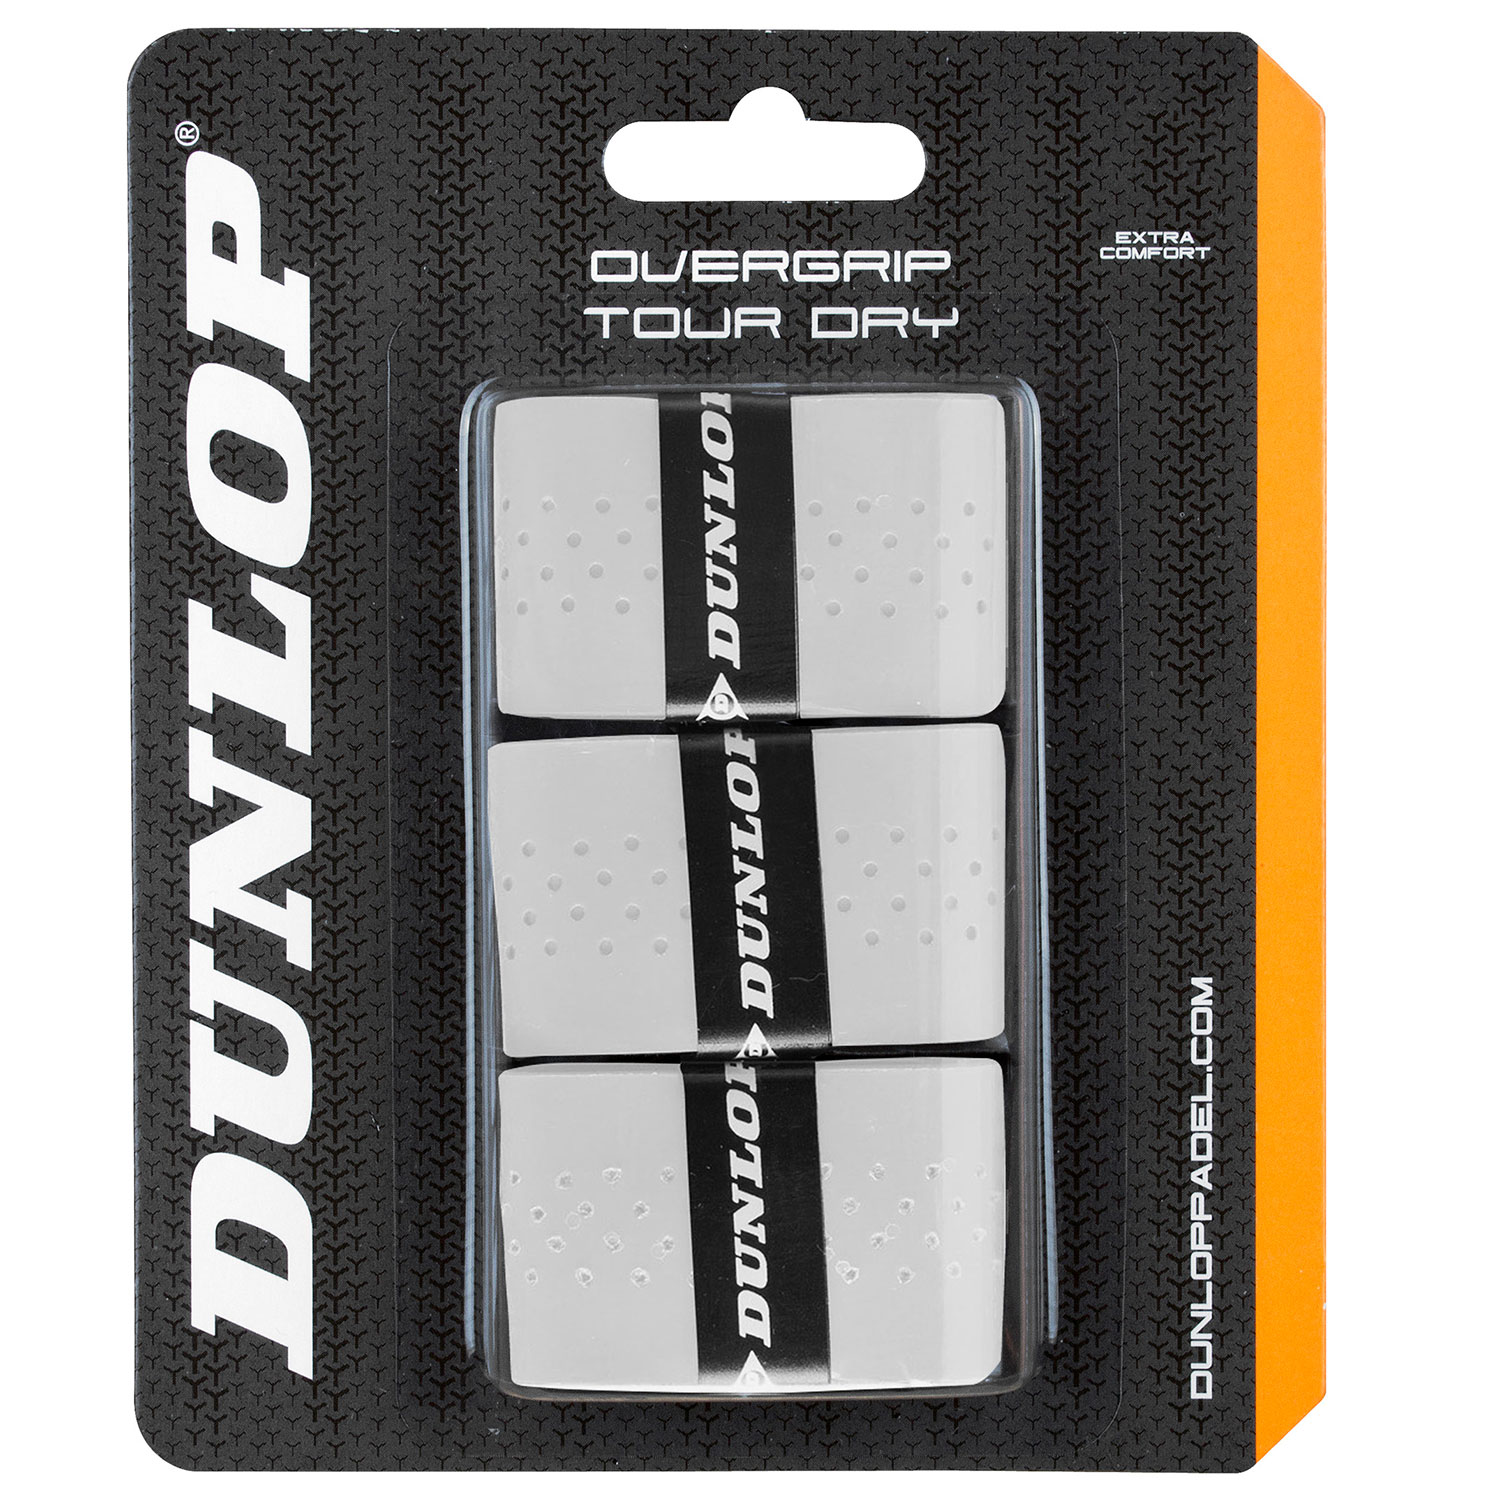 Dunlop Tour Dry x 3 Overgrip - White